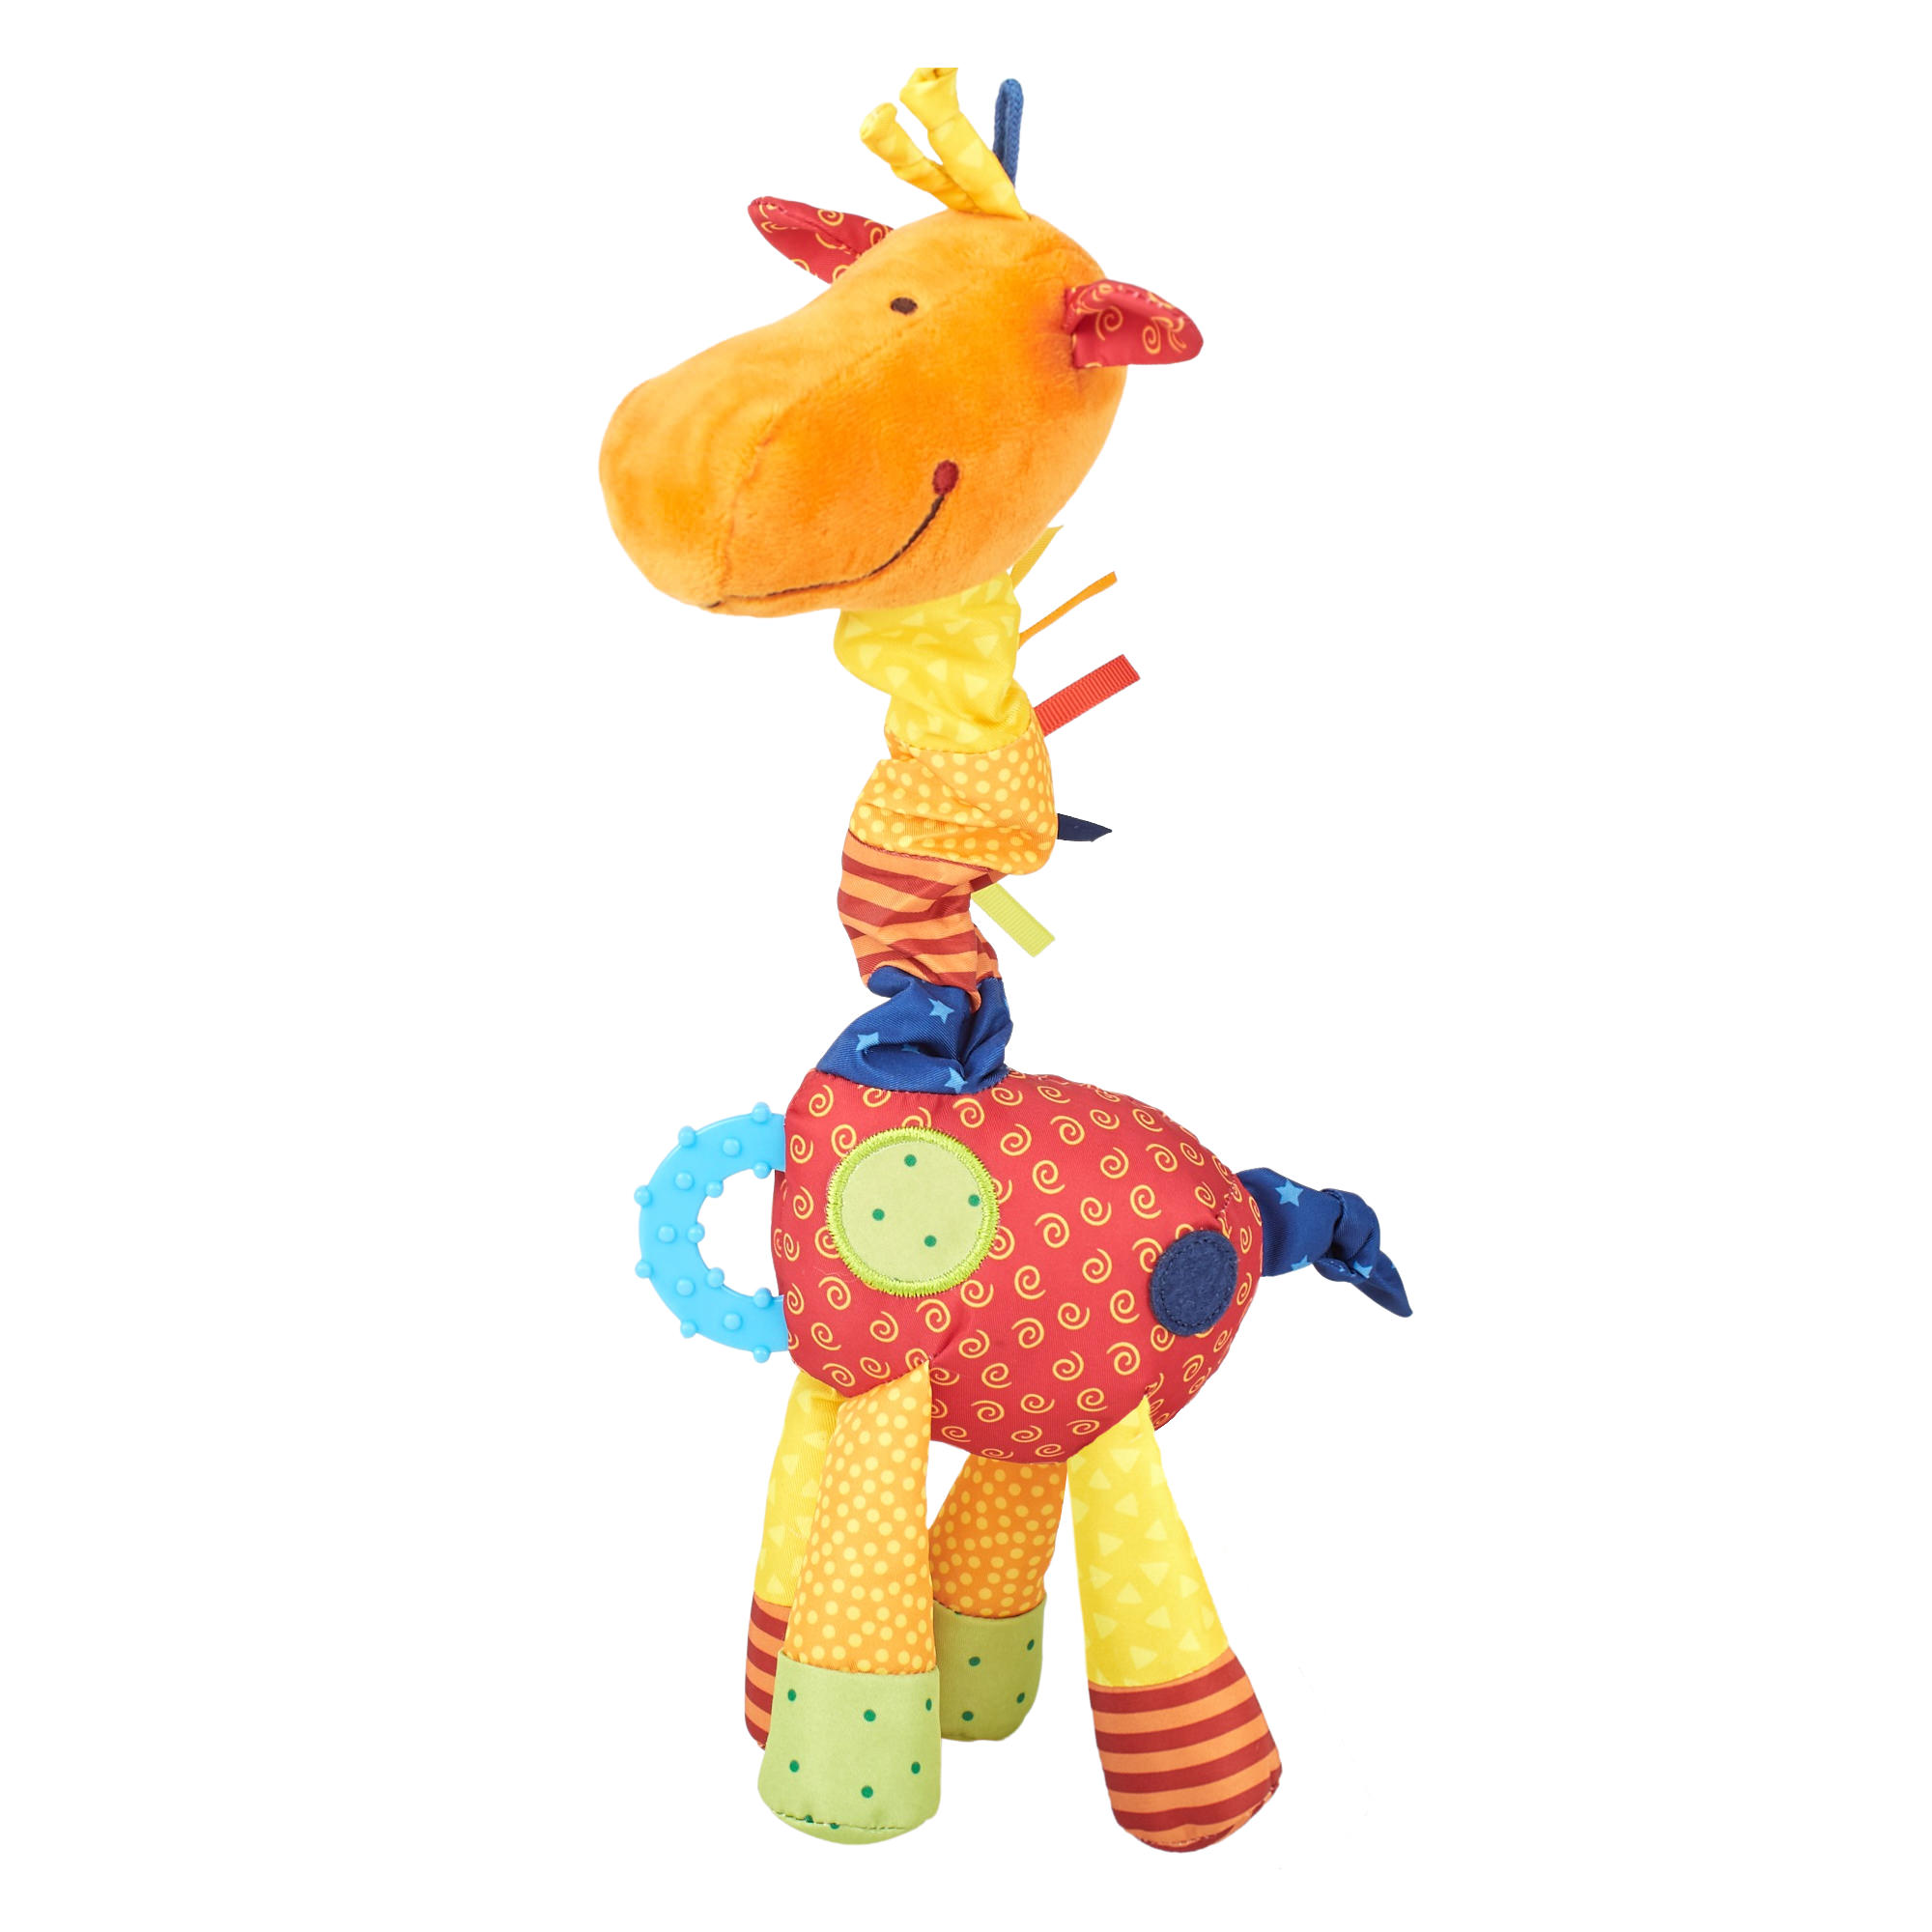 Little giraffe, activity toy